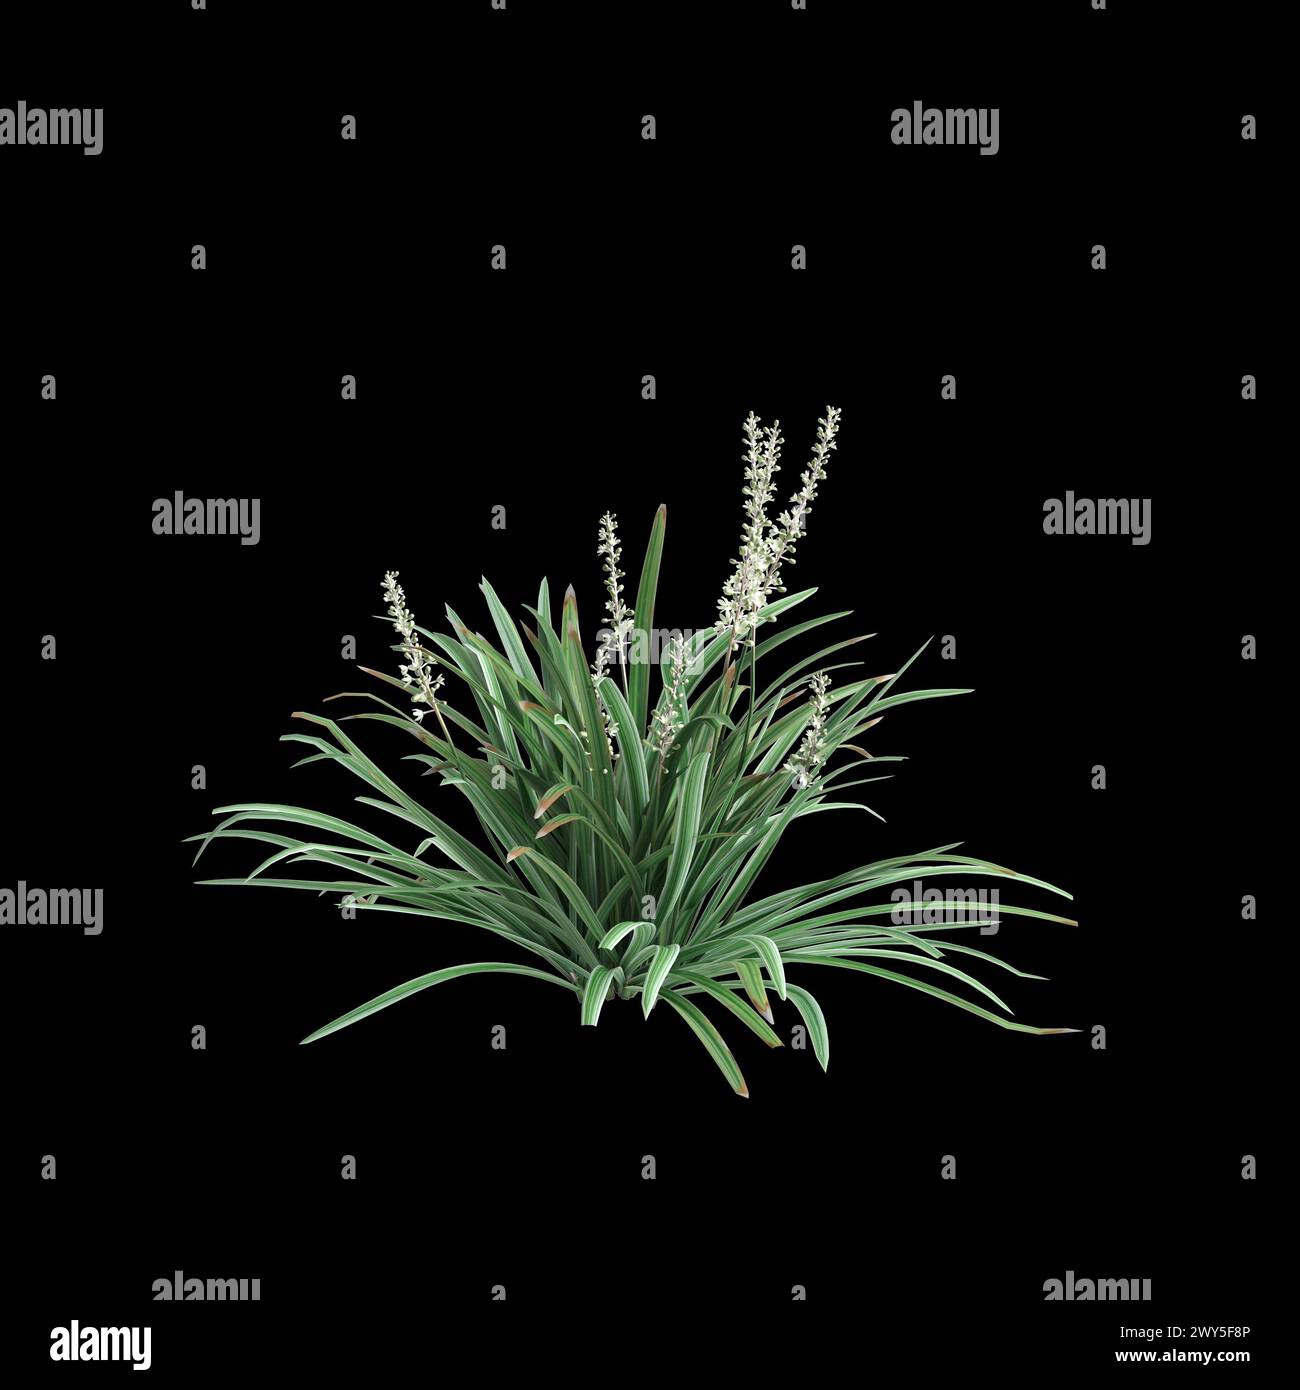 3d illustration of Liriope spicata bush isolated on black background Stock Photo